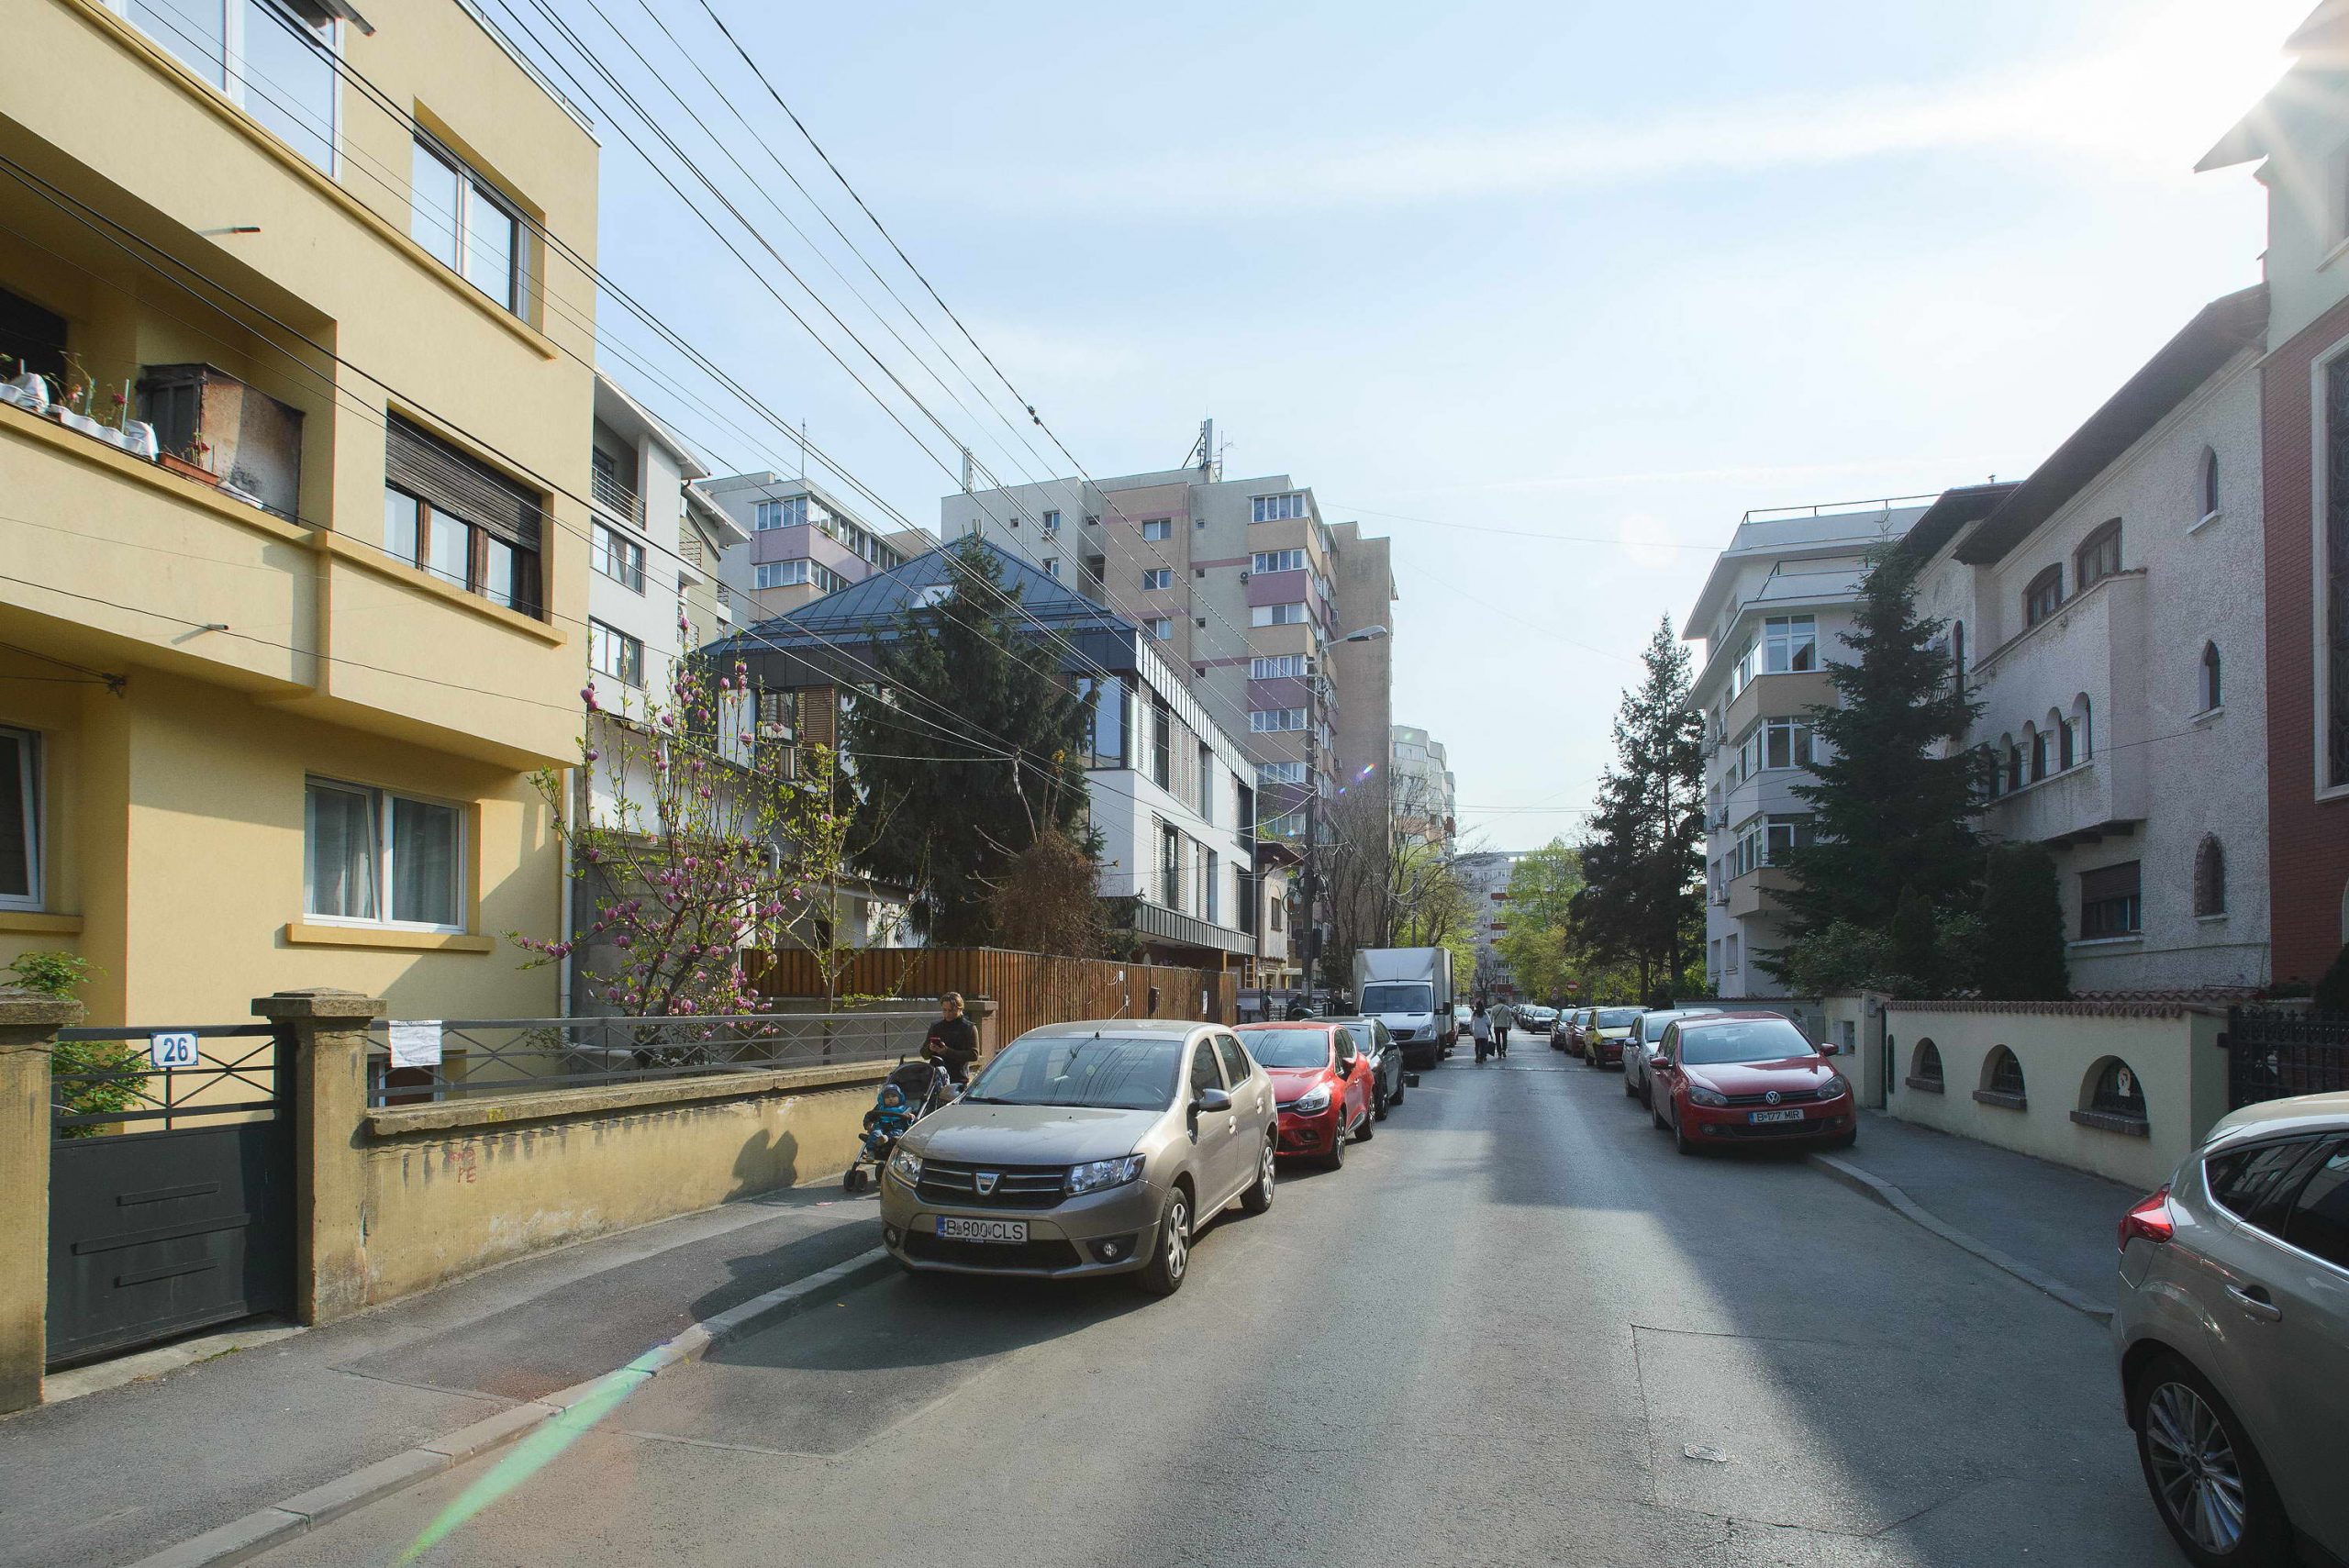 https://nbc-arhitect.ro/wp-content/uploads/2020/10/NBC-Arhitect-_-residences-_-HS-Office-_-Romania-_-exterior-view_4-scaled.jpg